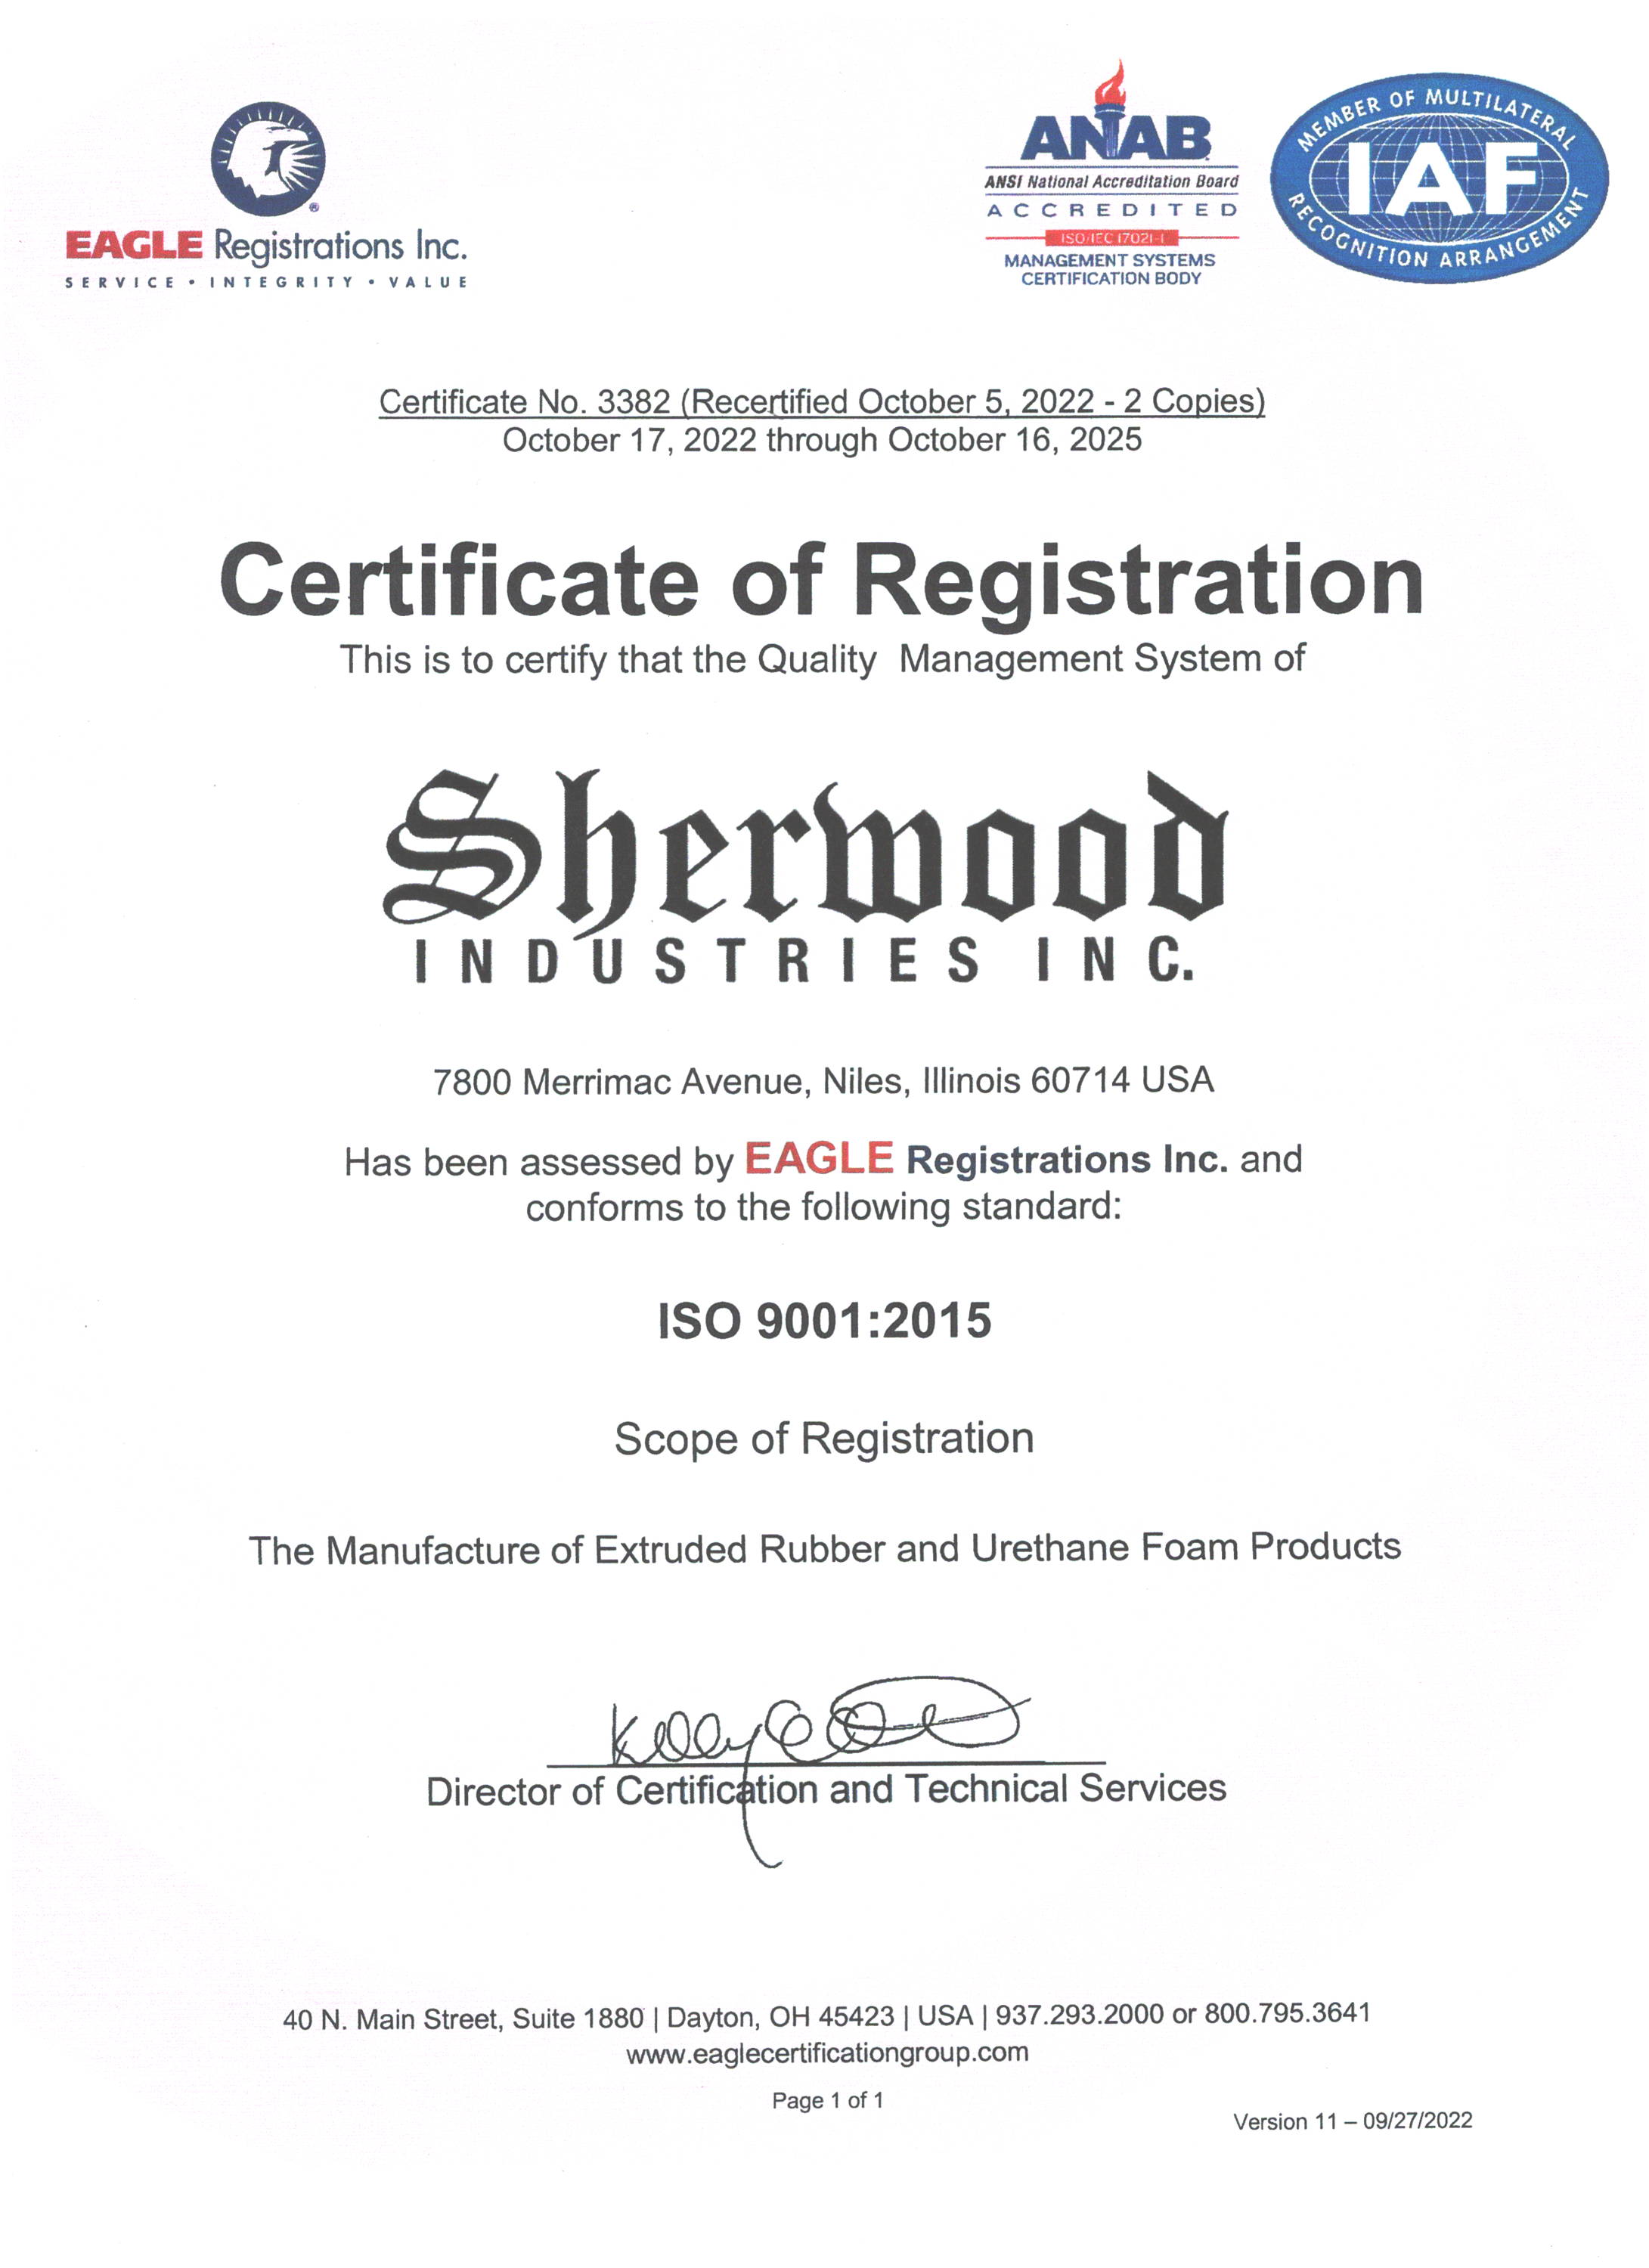 Sherwood ISO Certification